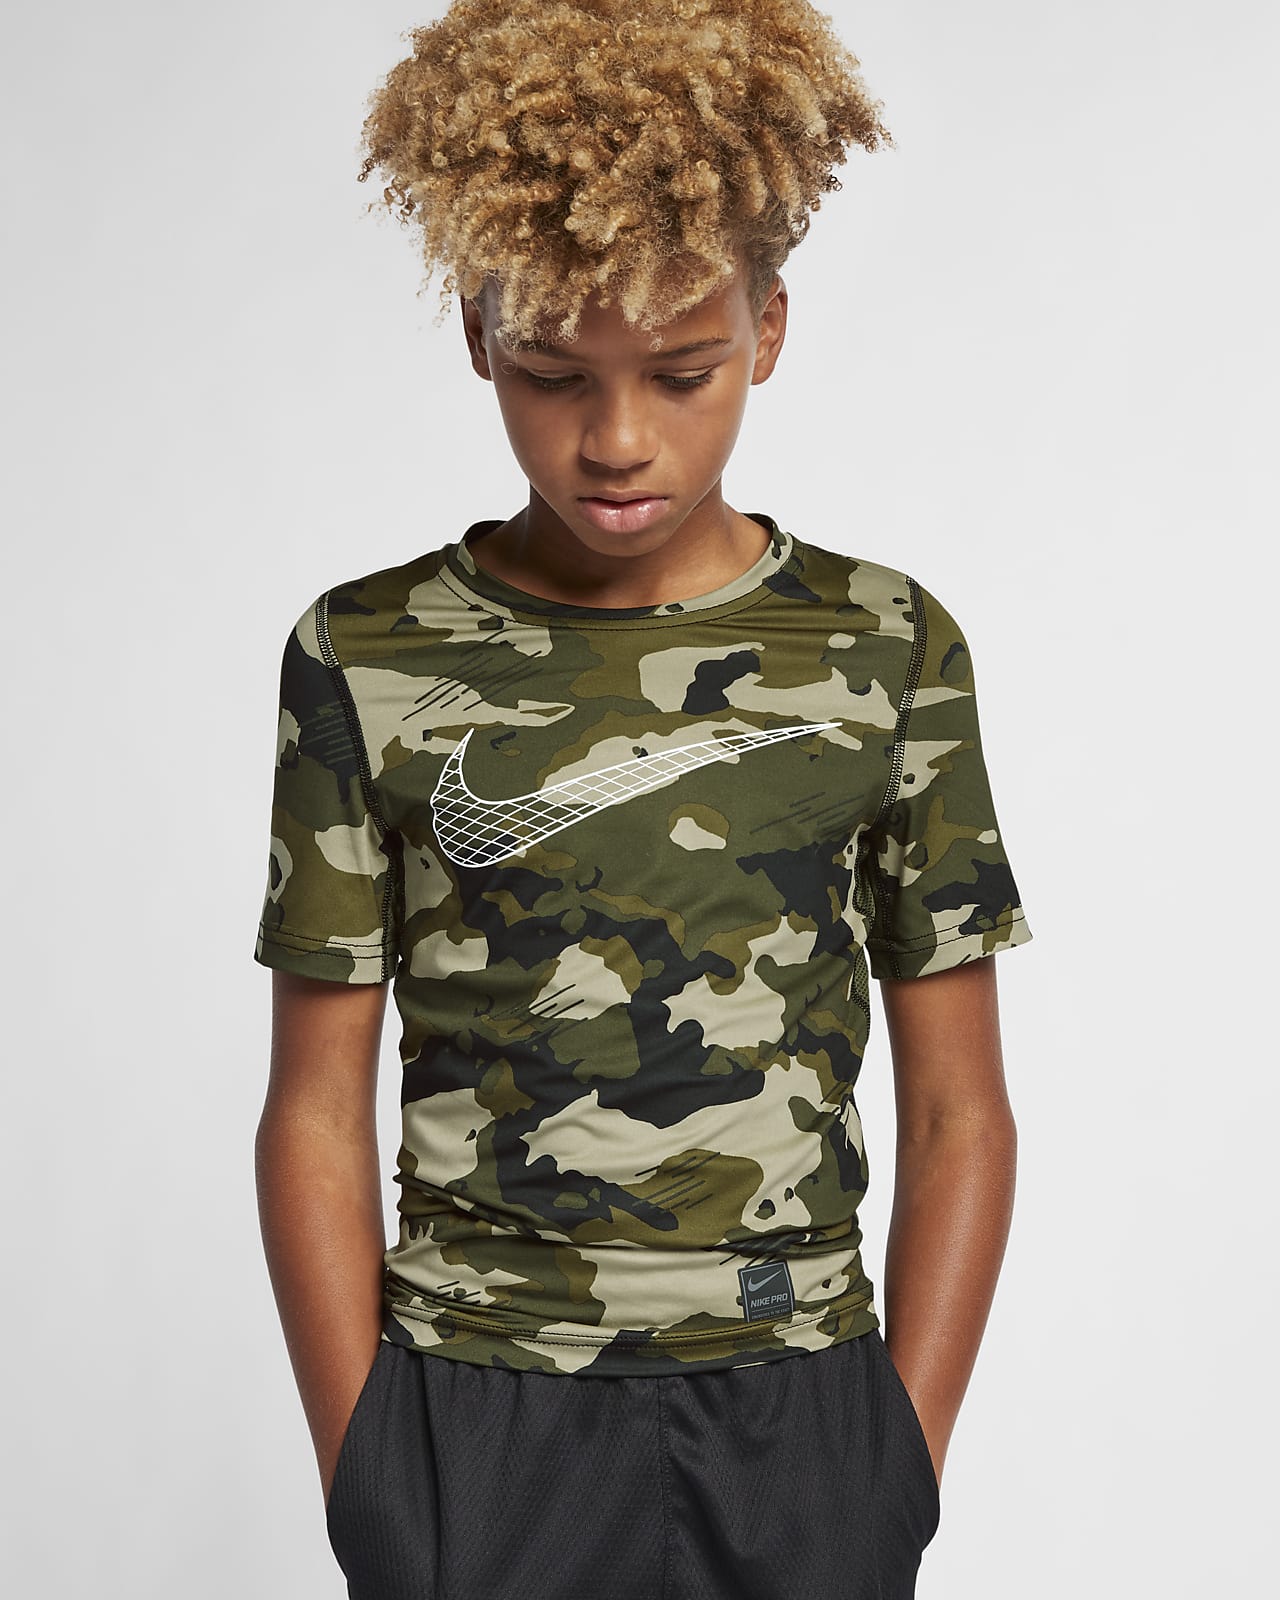 Nike Pro Boys' Short-Sleeve Camo Top